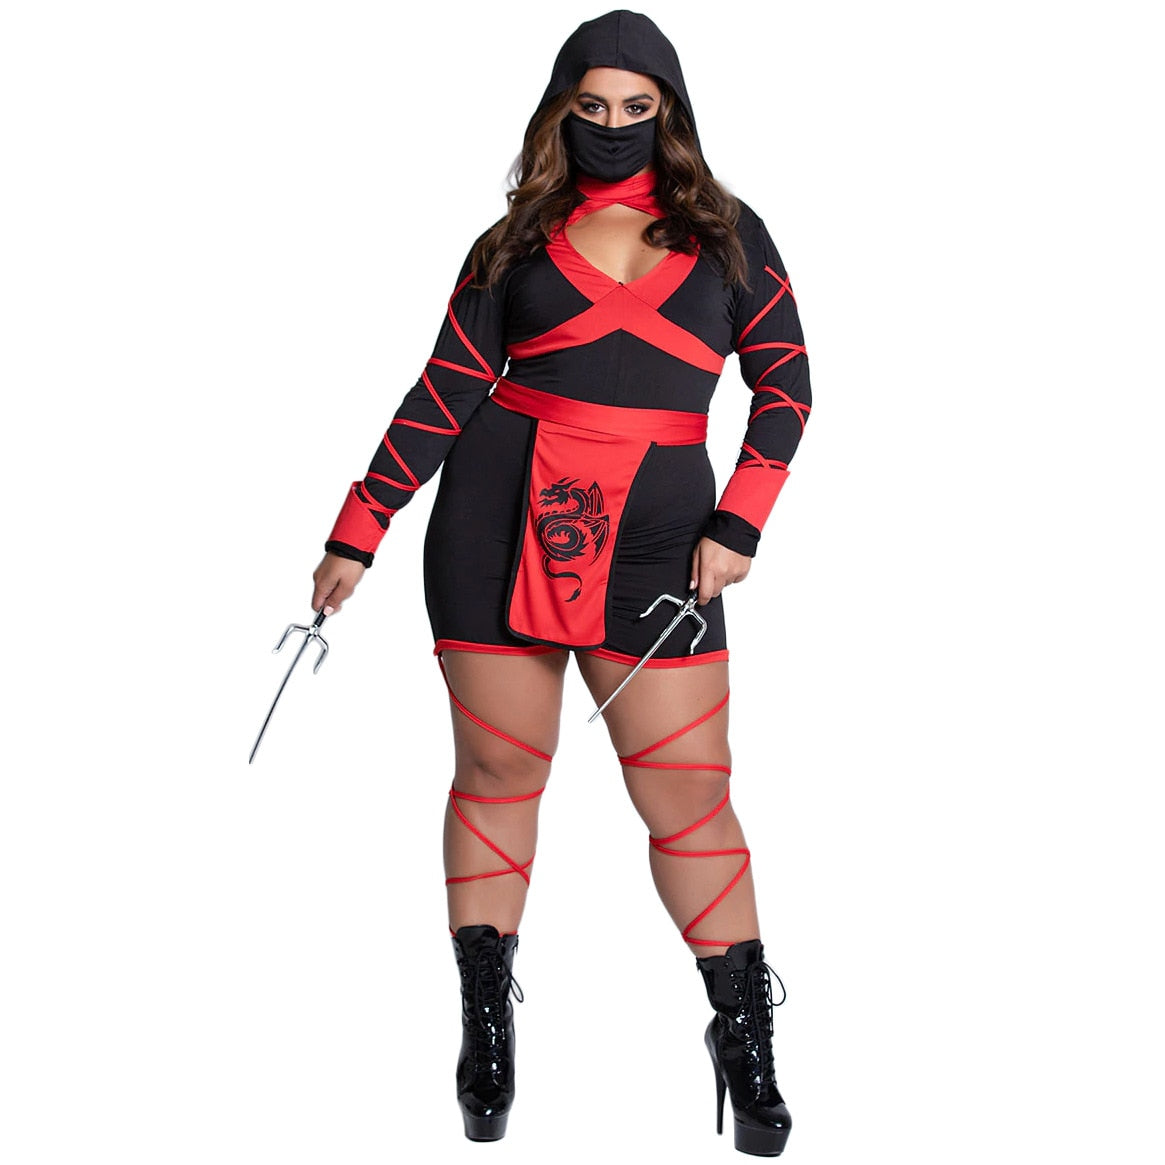 Sexy Plus Size Ninja Costume